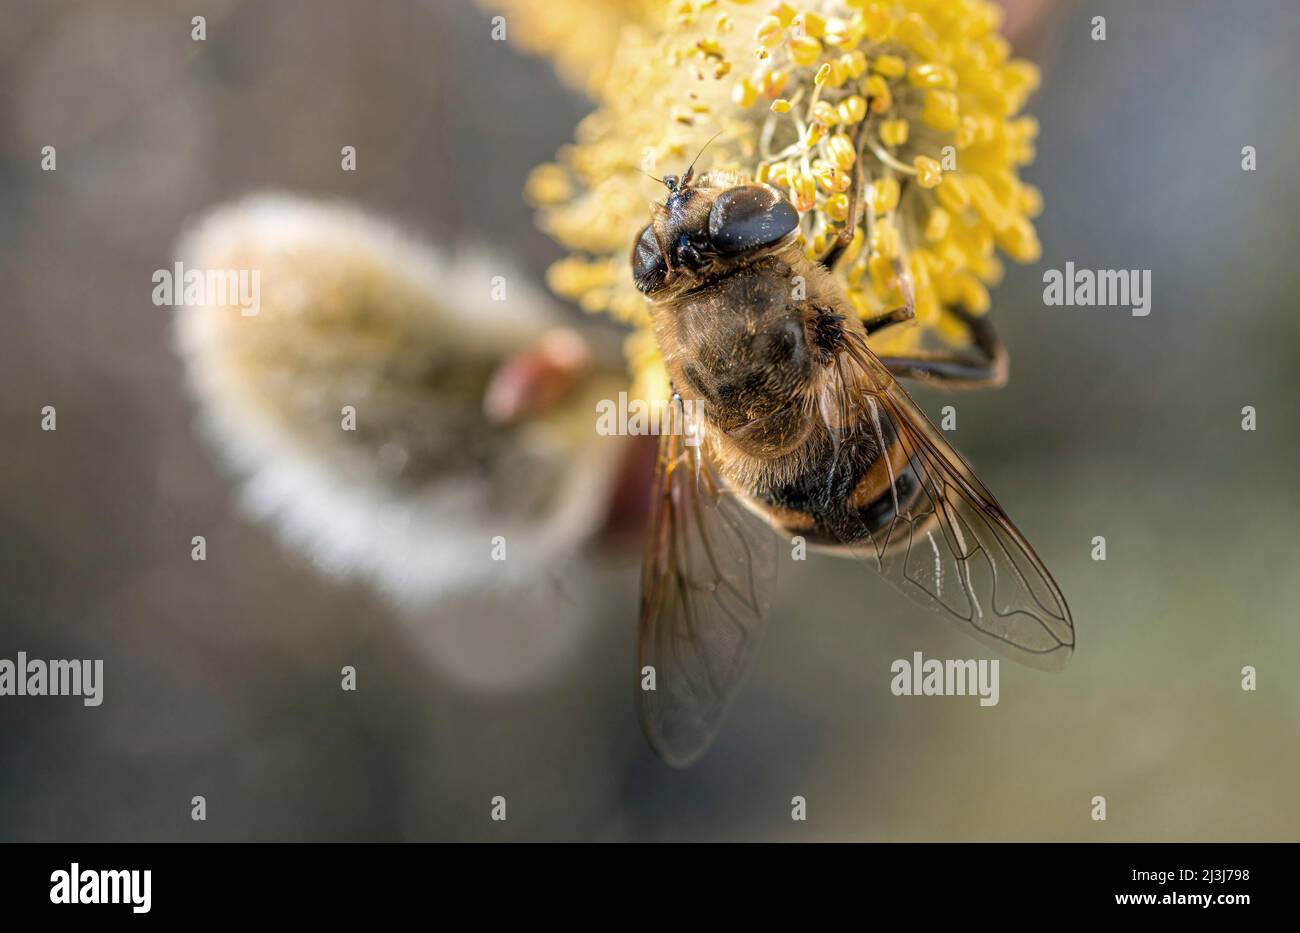 Western honeybee (Apis mellifera) pollinating a willow catkin (Salix caprea) Germany, Europe Stock Photo